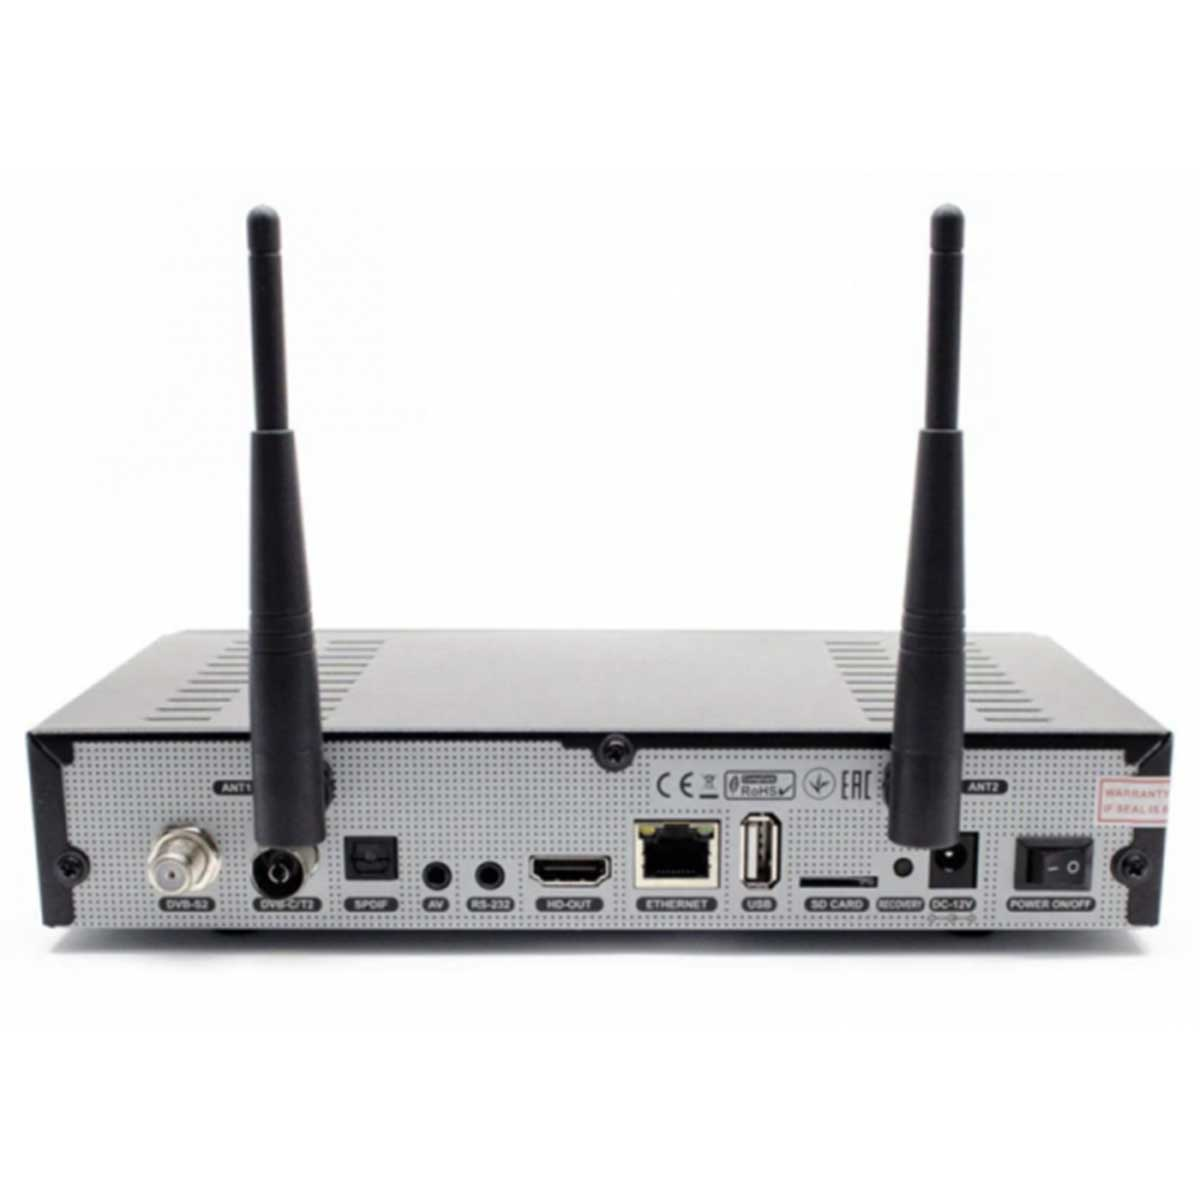 UCLAN (H.265), DVB-T2 Sat-Receiver schwarz) 4K (HDTV, Ustym DVB-C, DVB-S2, Pro PVR-Funktion=optional,